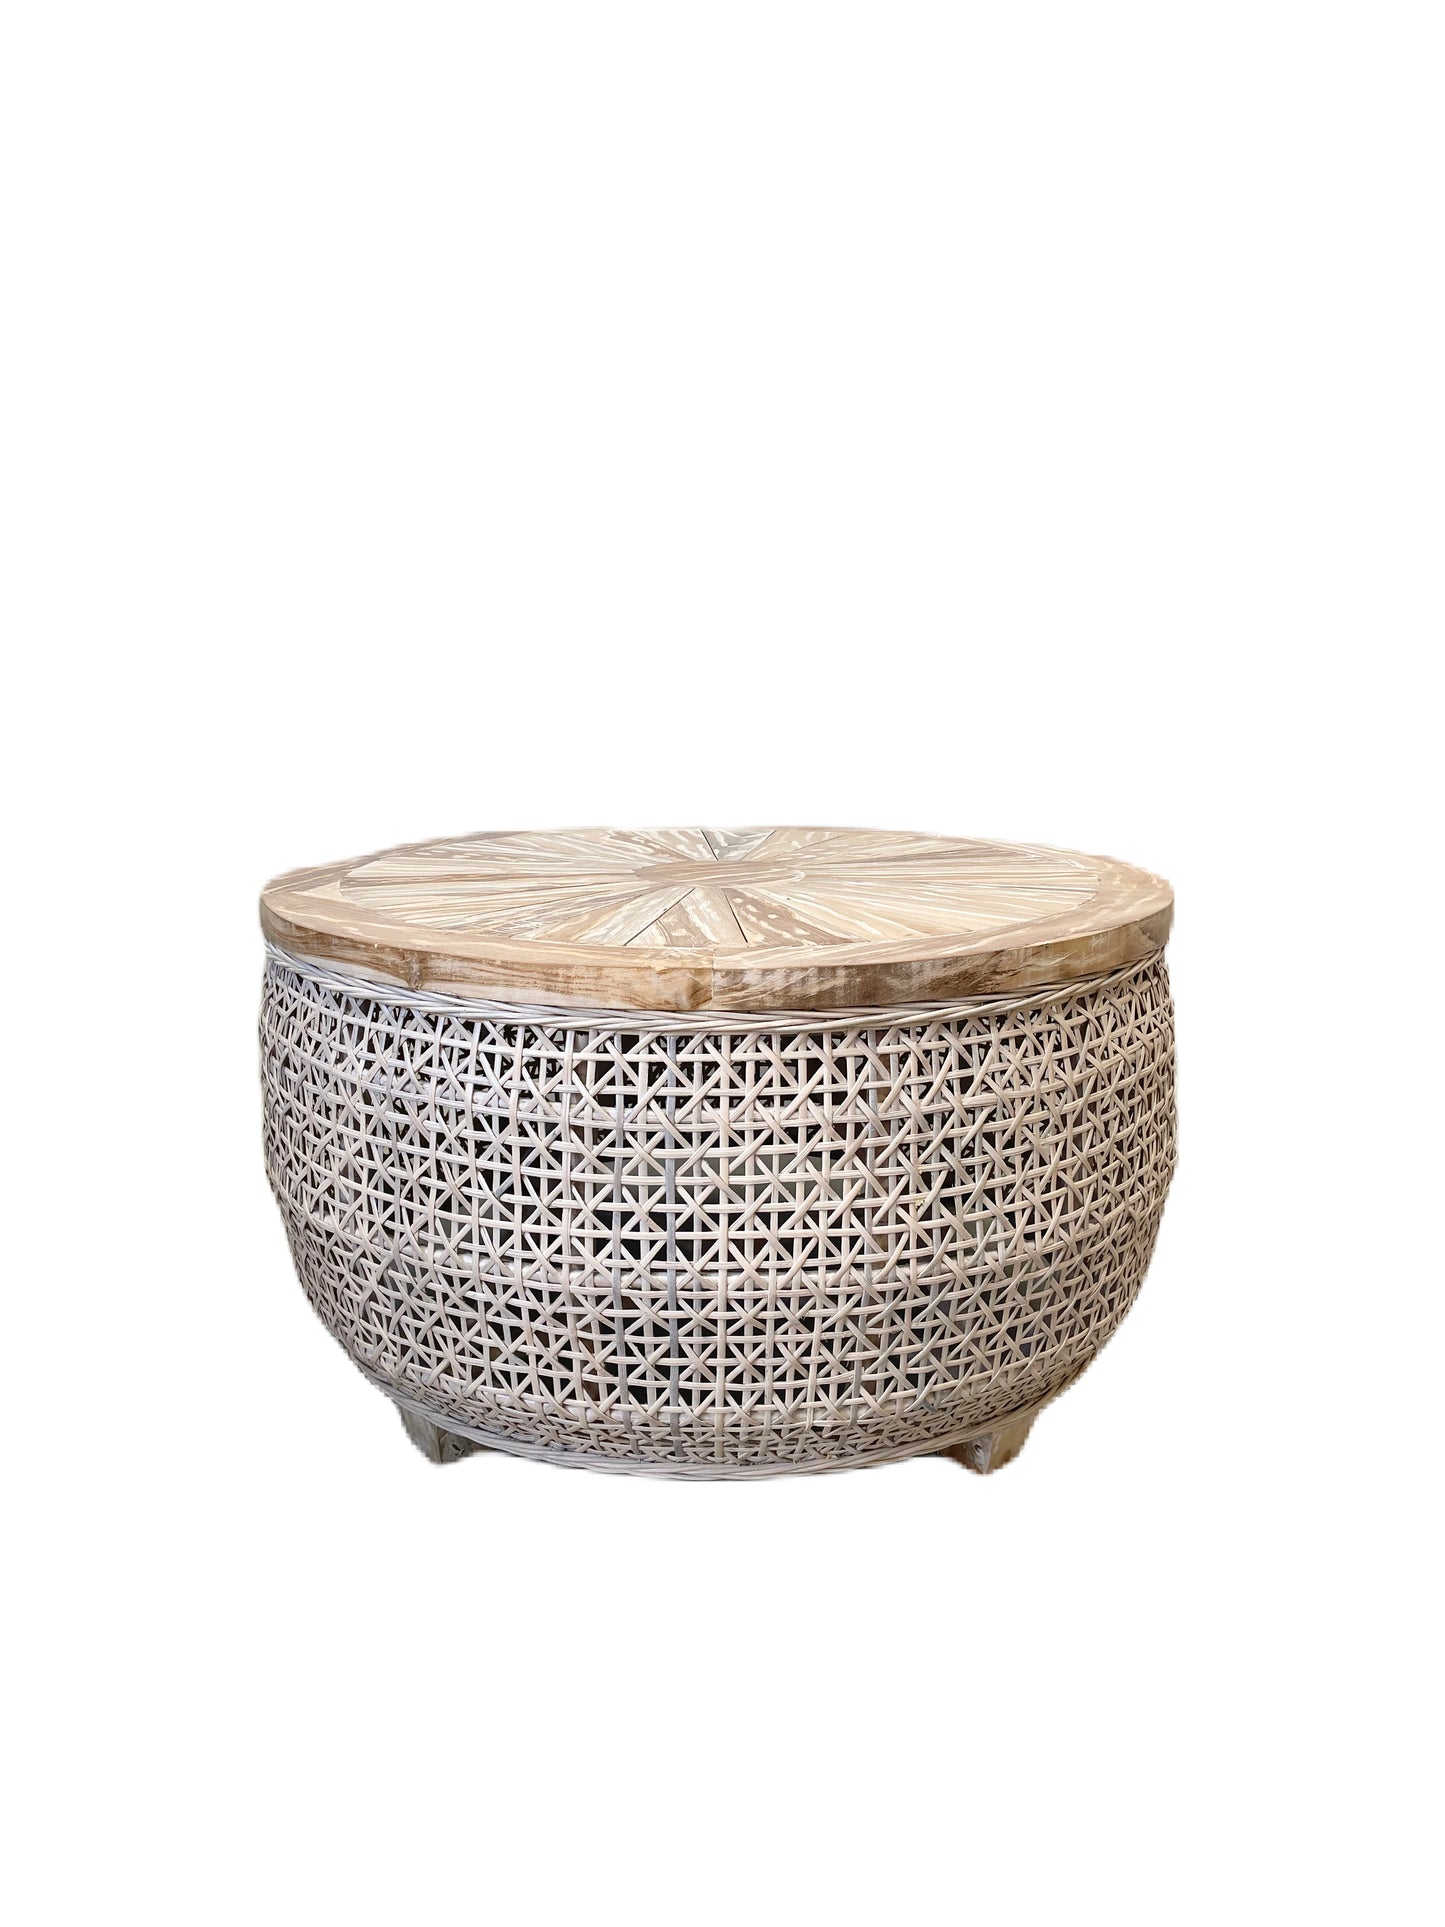 Basket Weave Coffee Table